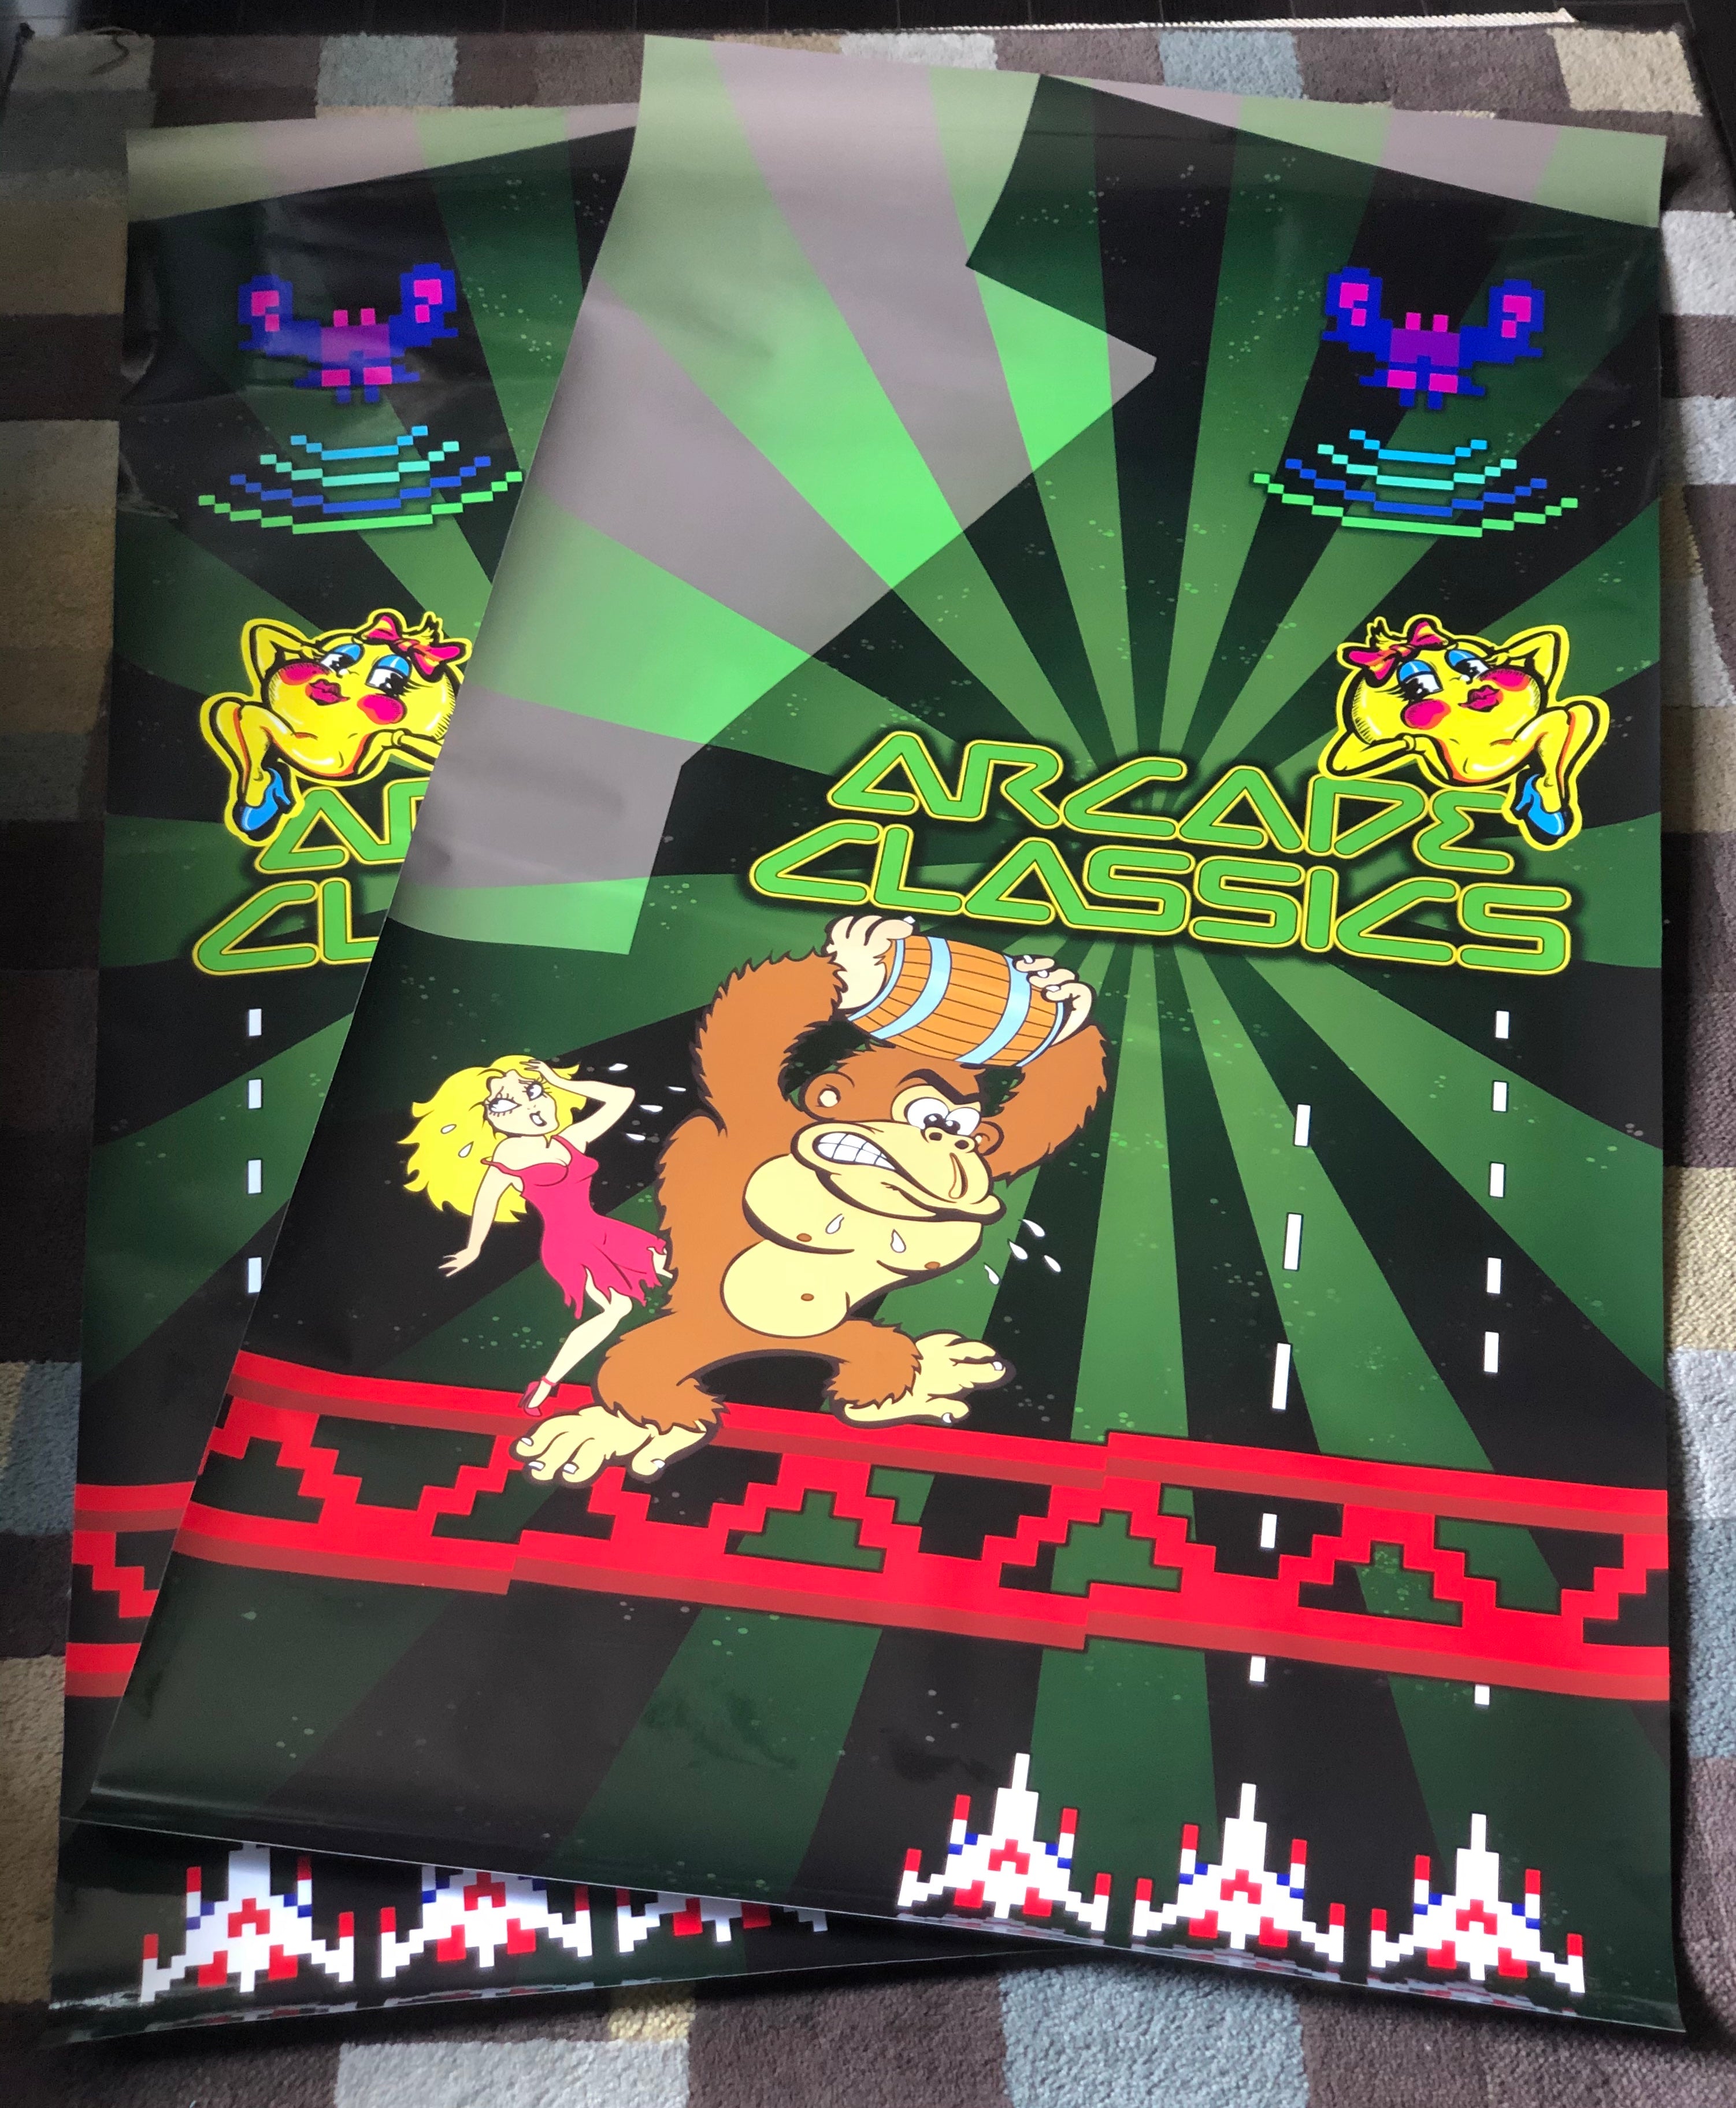 Arcade Classics Multicade Complete Art Kit